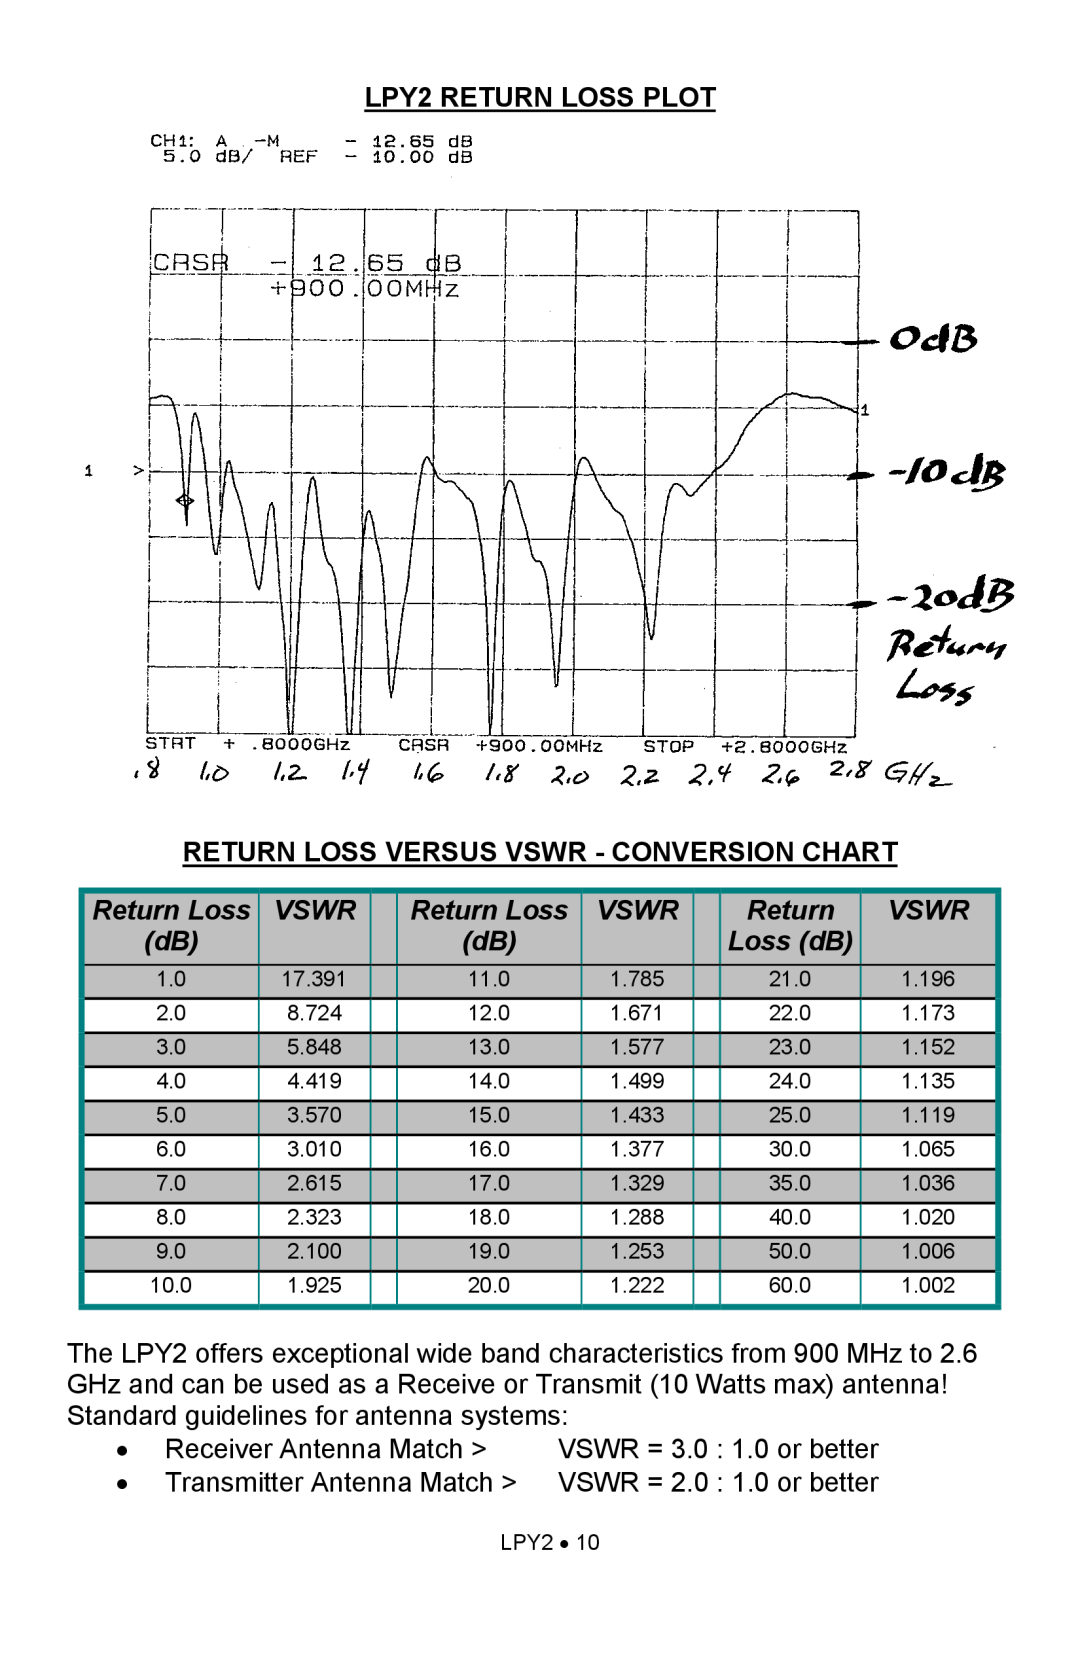 Ramsey Electronics manual LPY2 RETURN LOSS PLOT, Return Loss Versus Vswr - Conversion Chart, Loss dB 